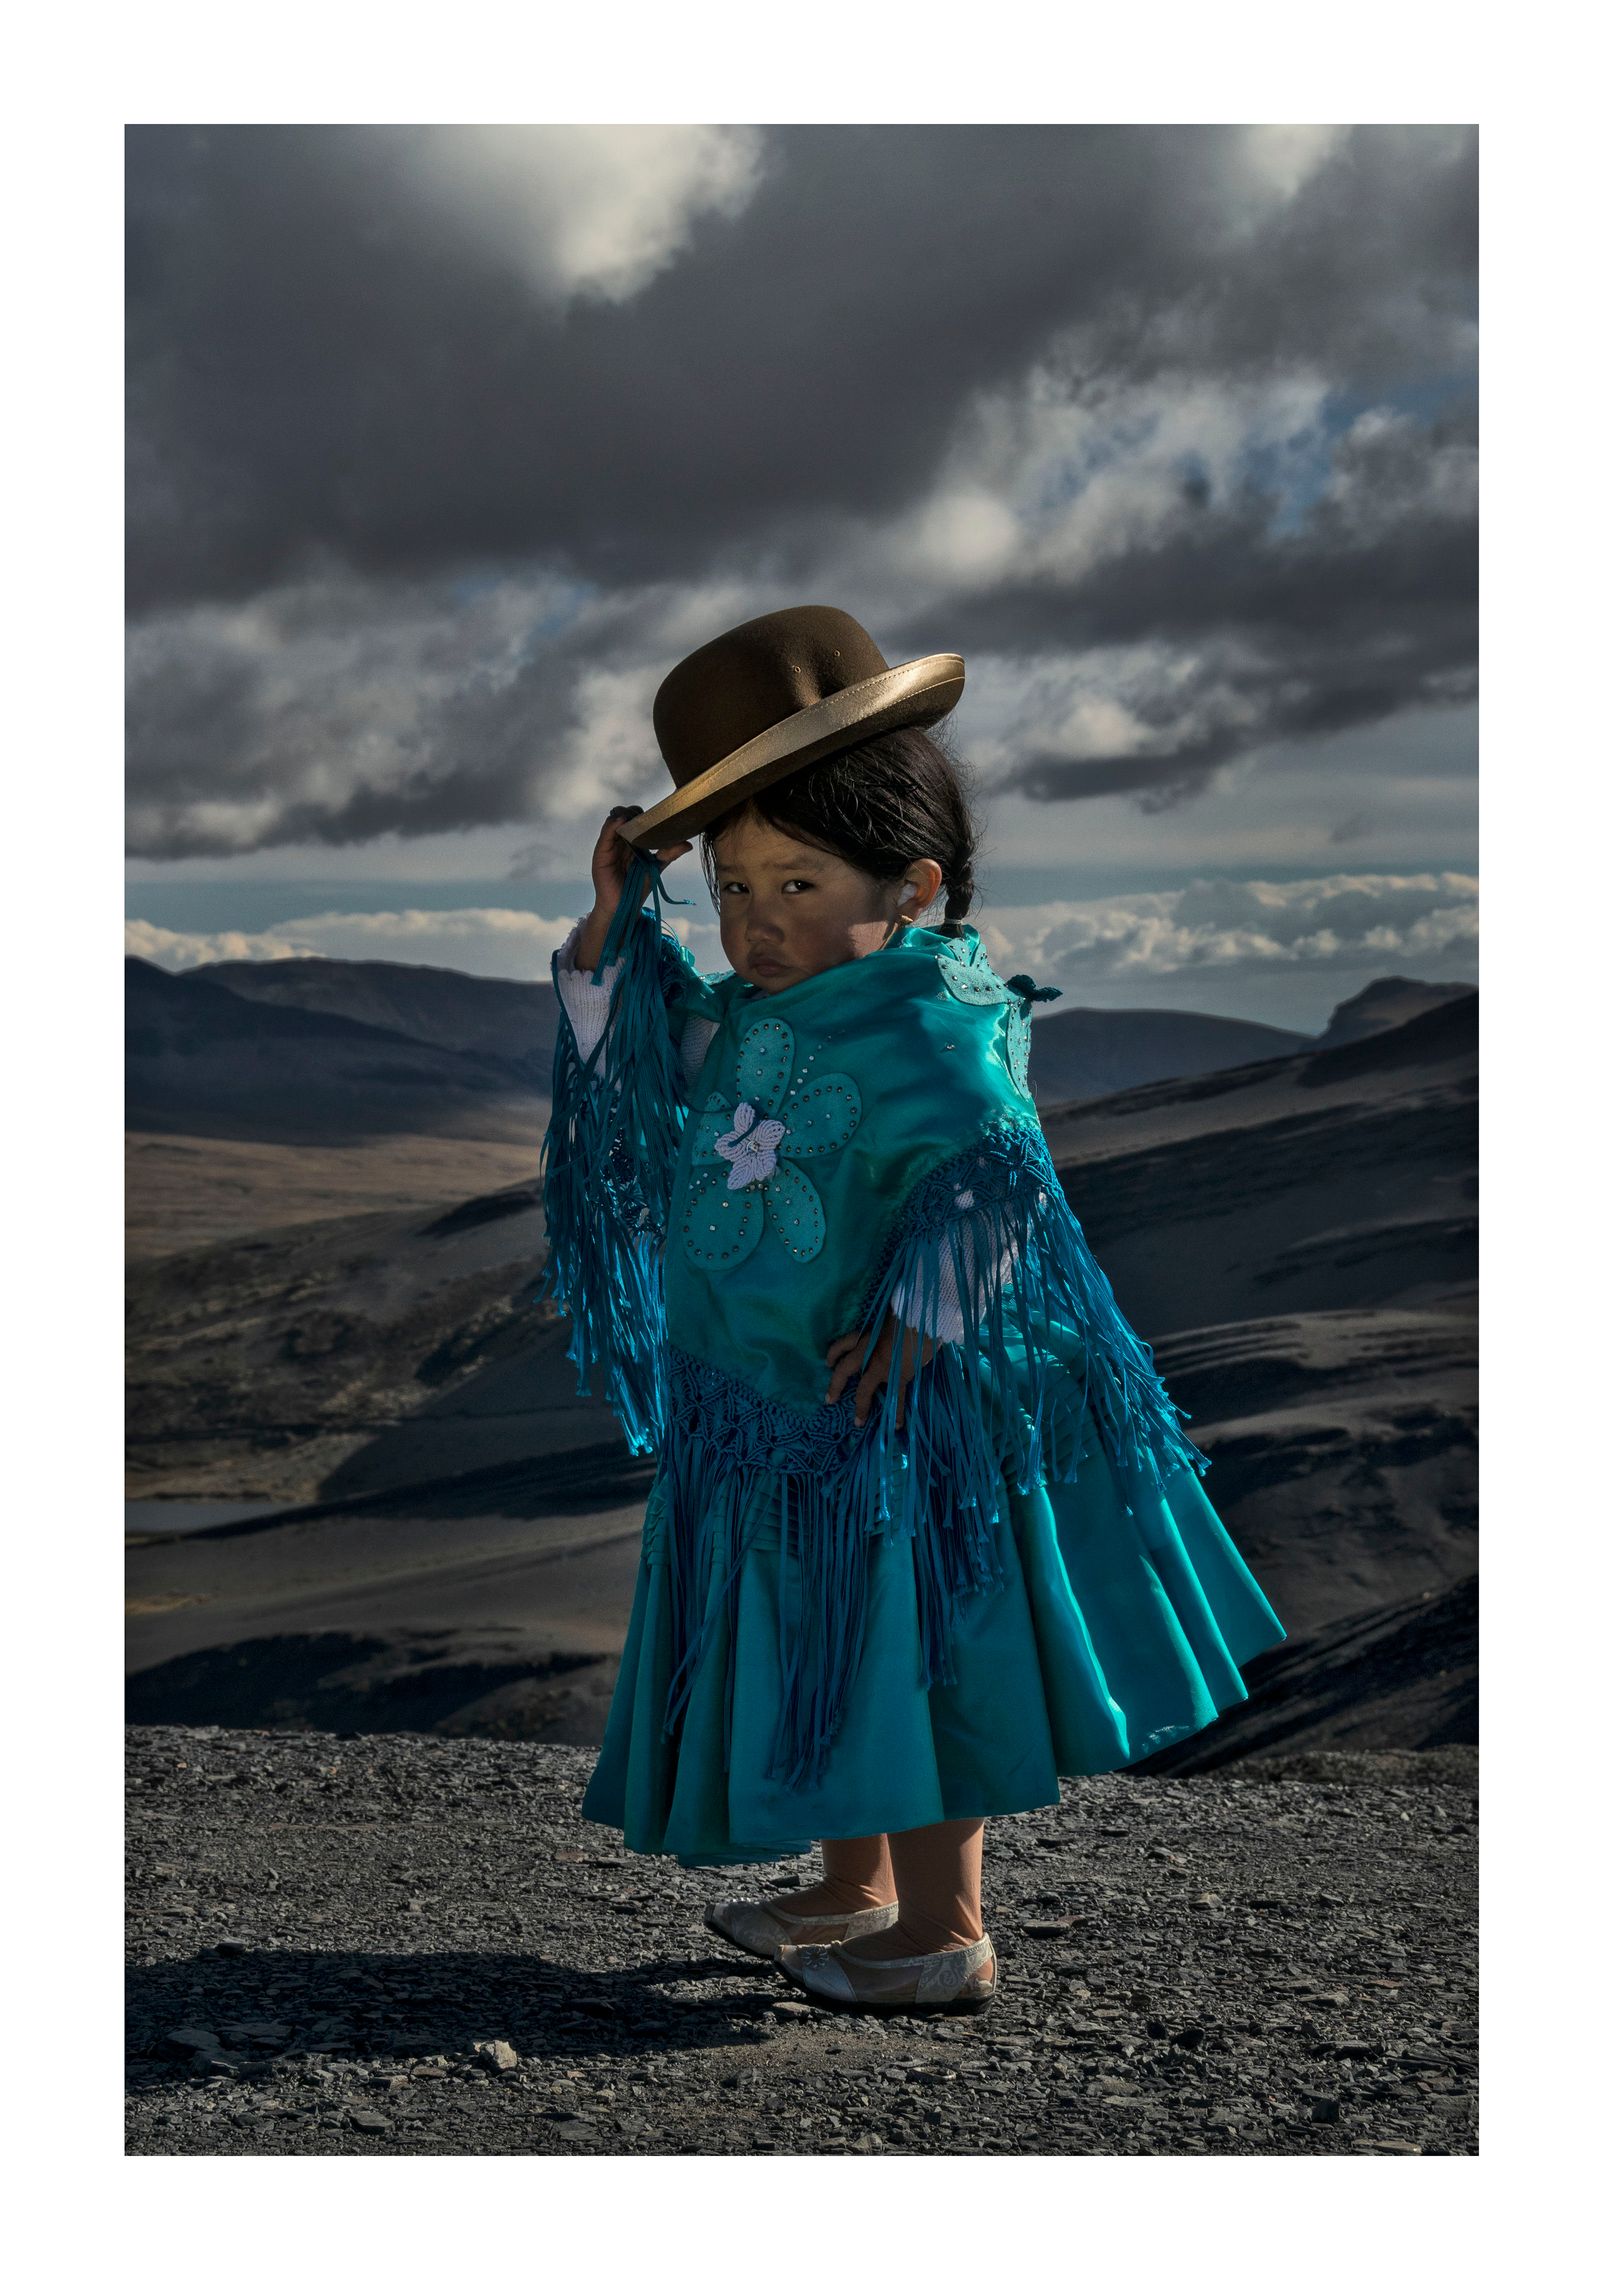 © Sara Aliaga - Image from the Cholita tenias que ser photography project